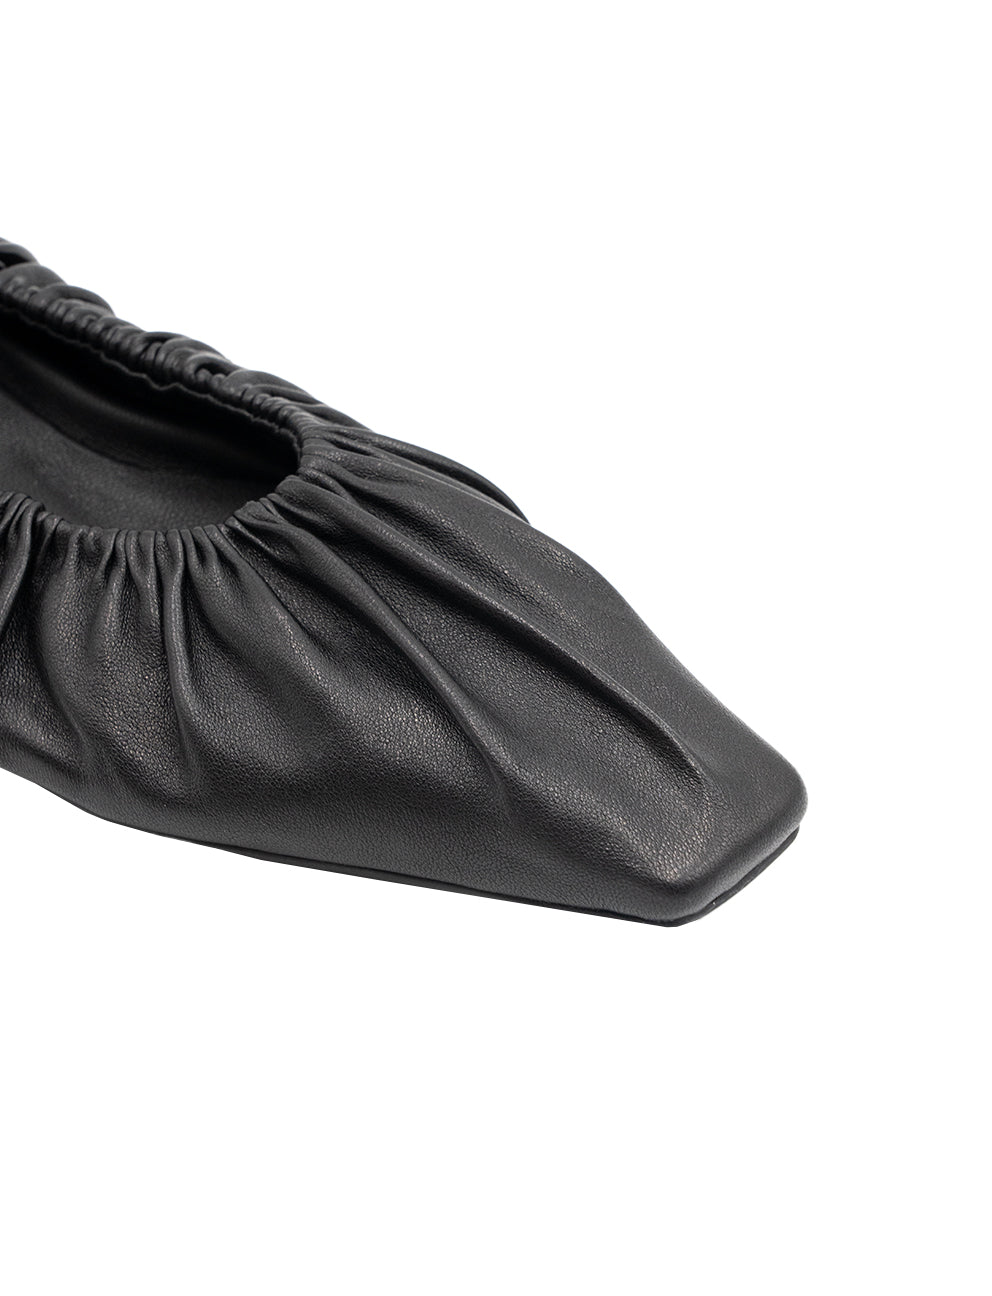 black nappa leather